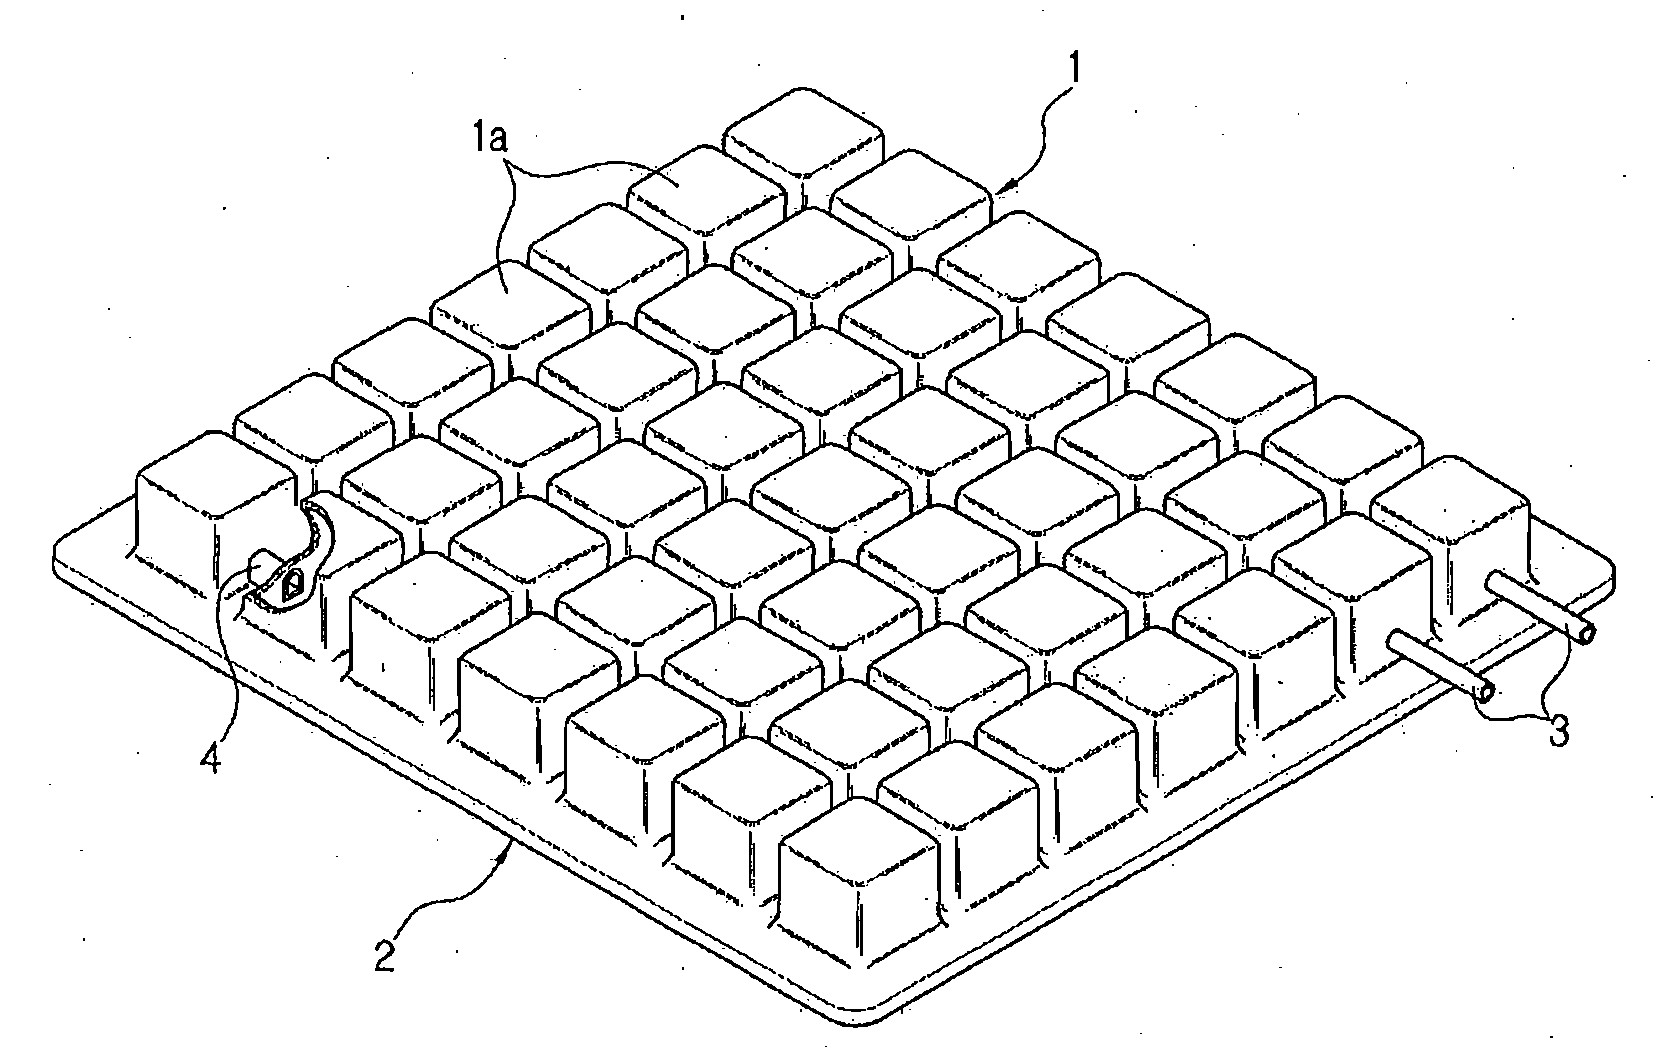 Manufacturing method of air mat